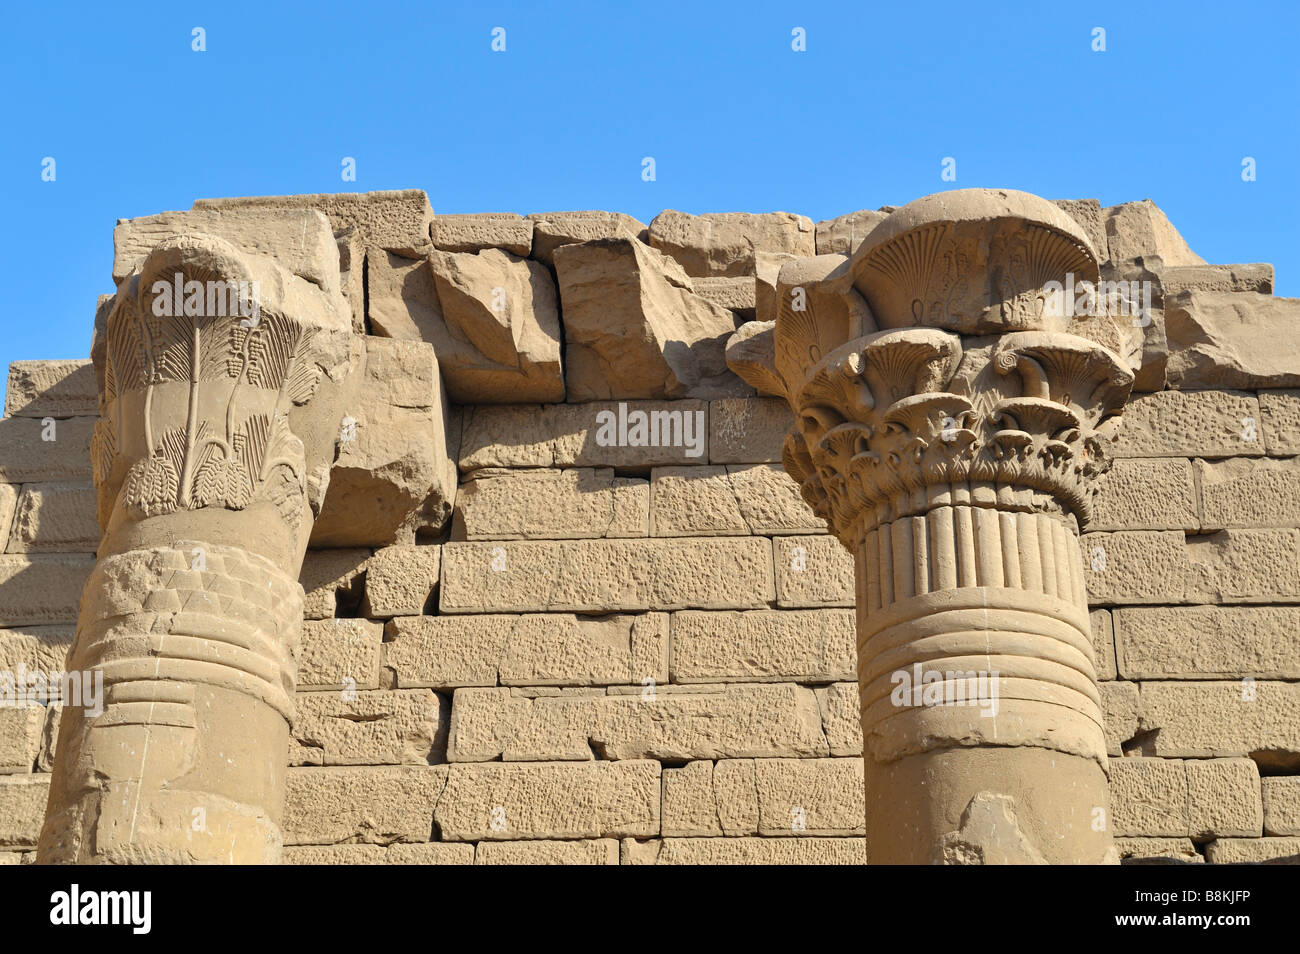 Forecourt columns, Kalabsha Temple, New Kalabsha Island, Aswan, Egypt 081122 33366 Stock Photo